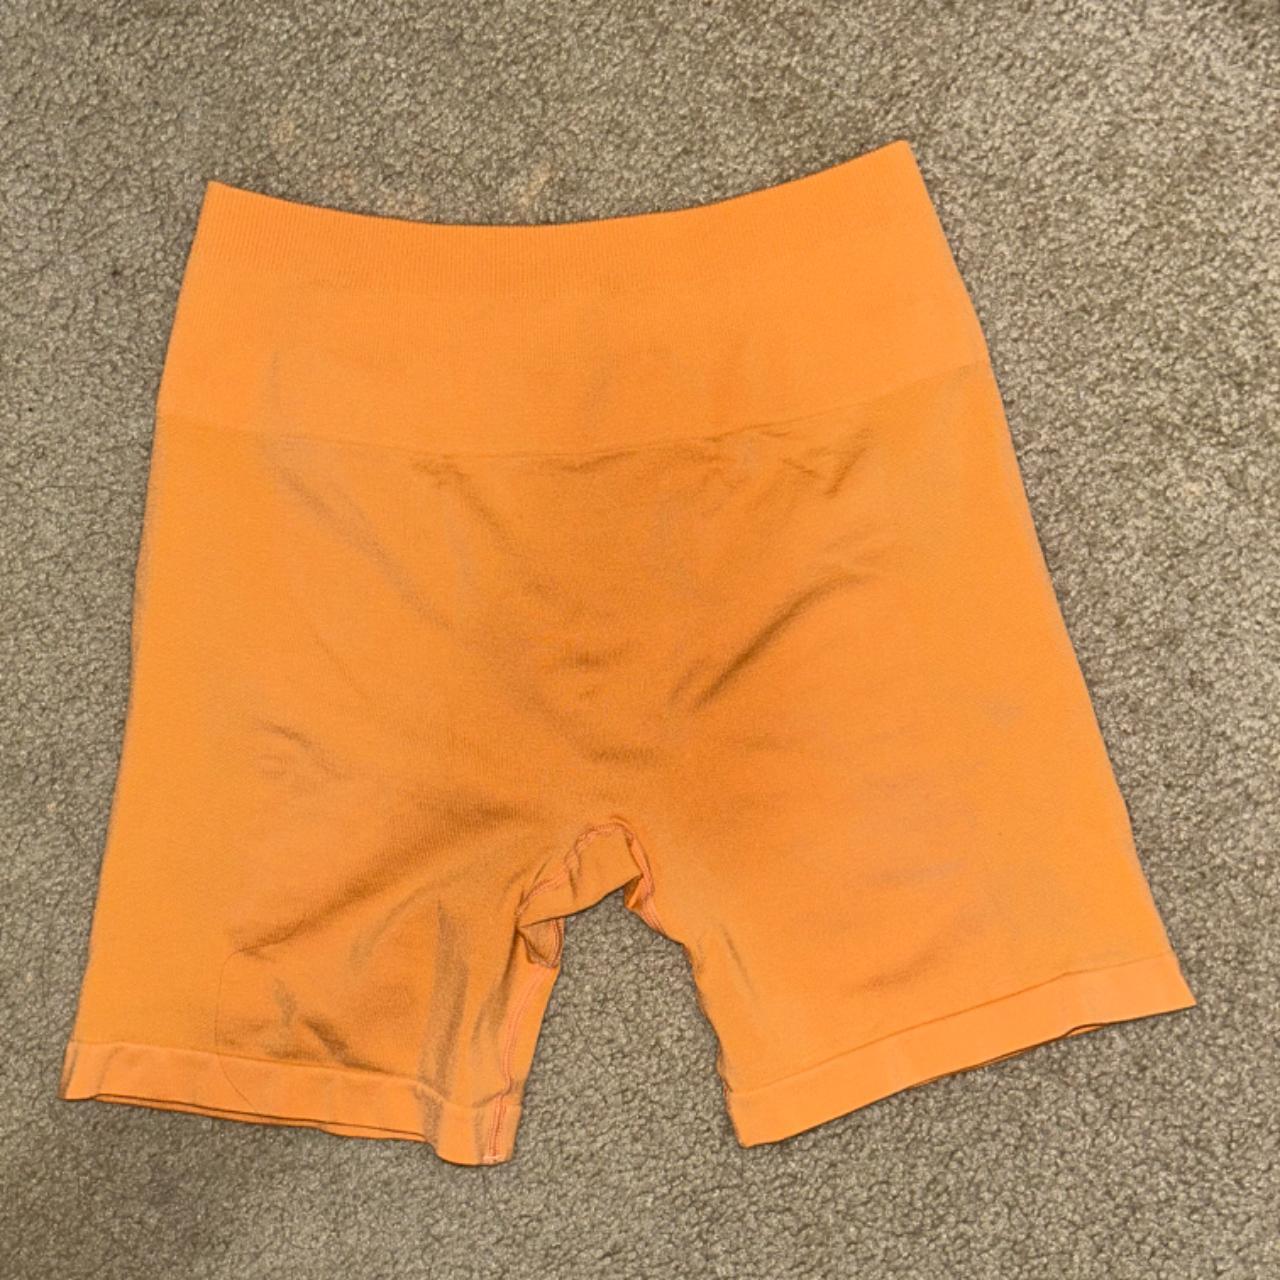 Orange Aurola shorts size small, worn once🧡 just - Depop